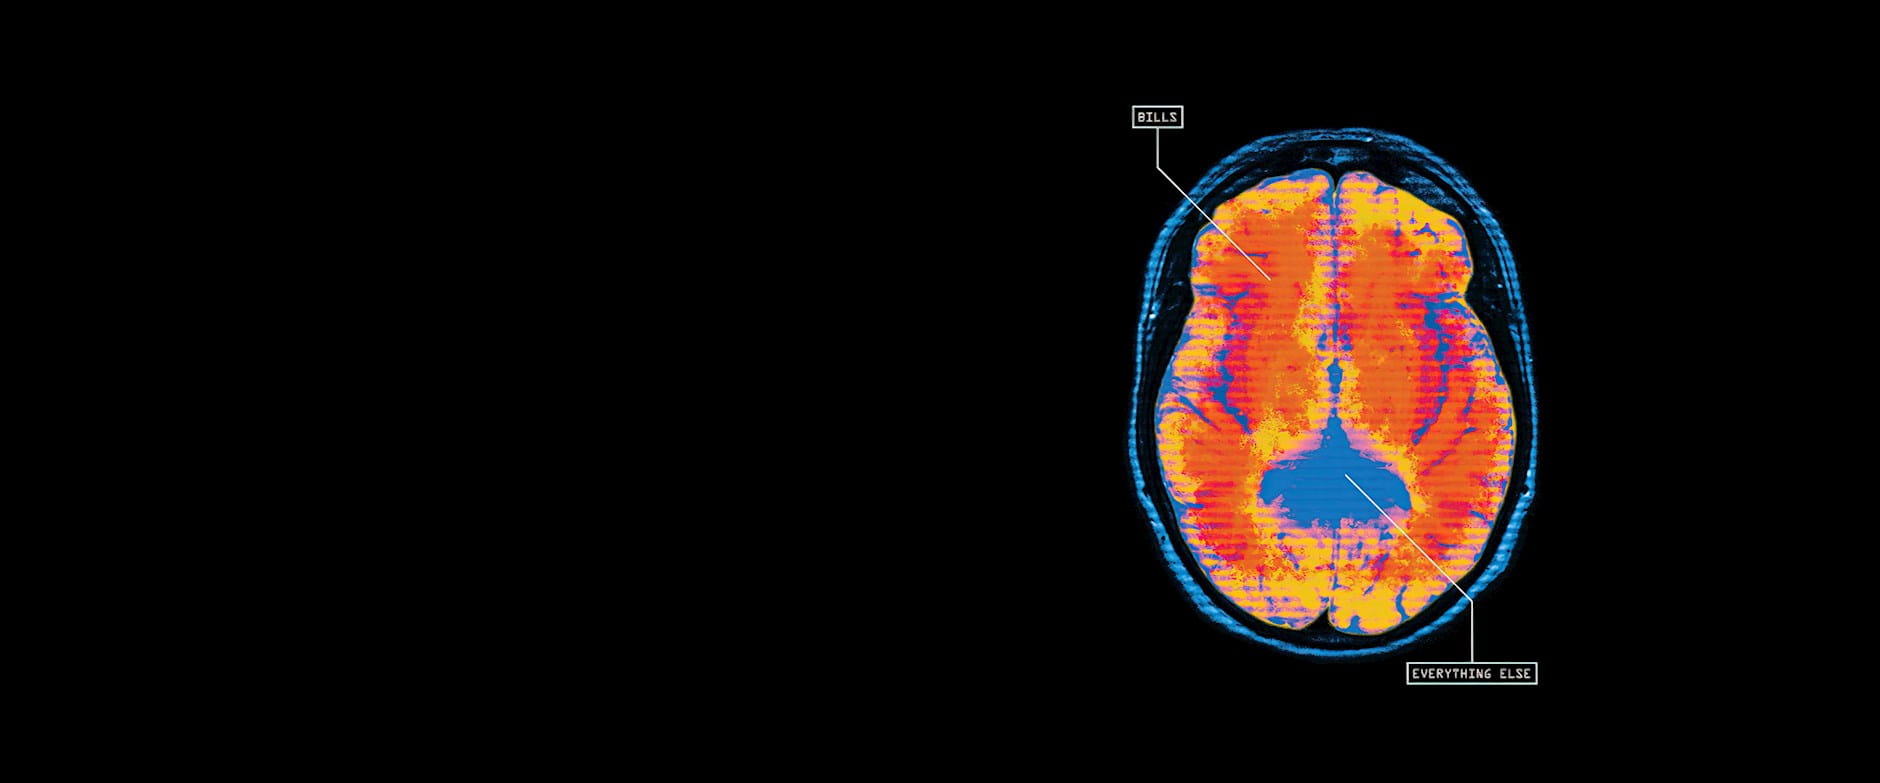 Primary colored brain scan